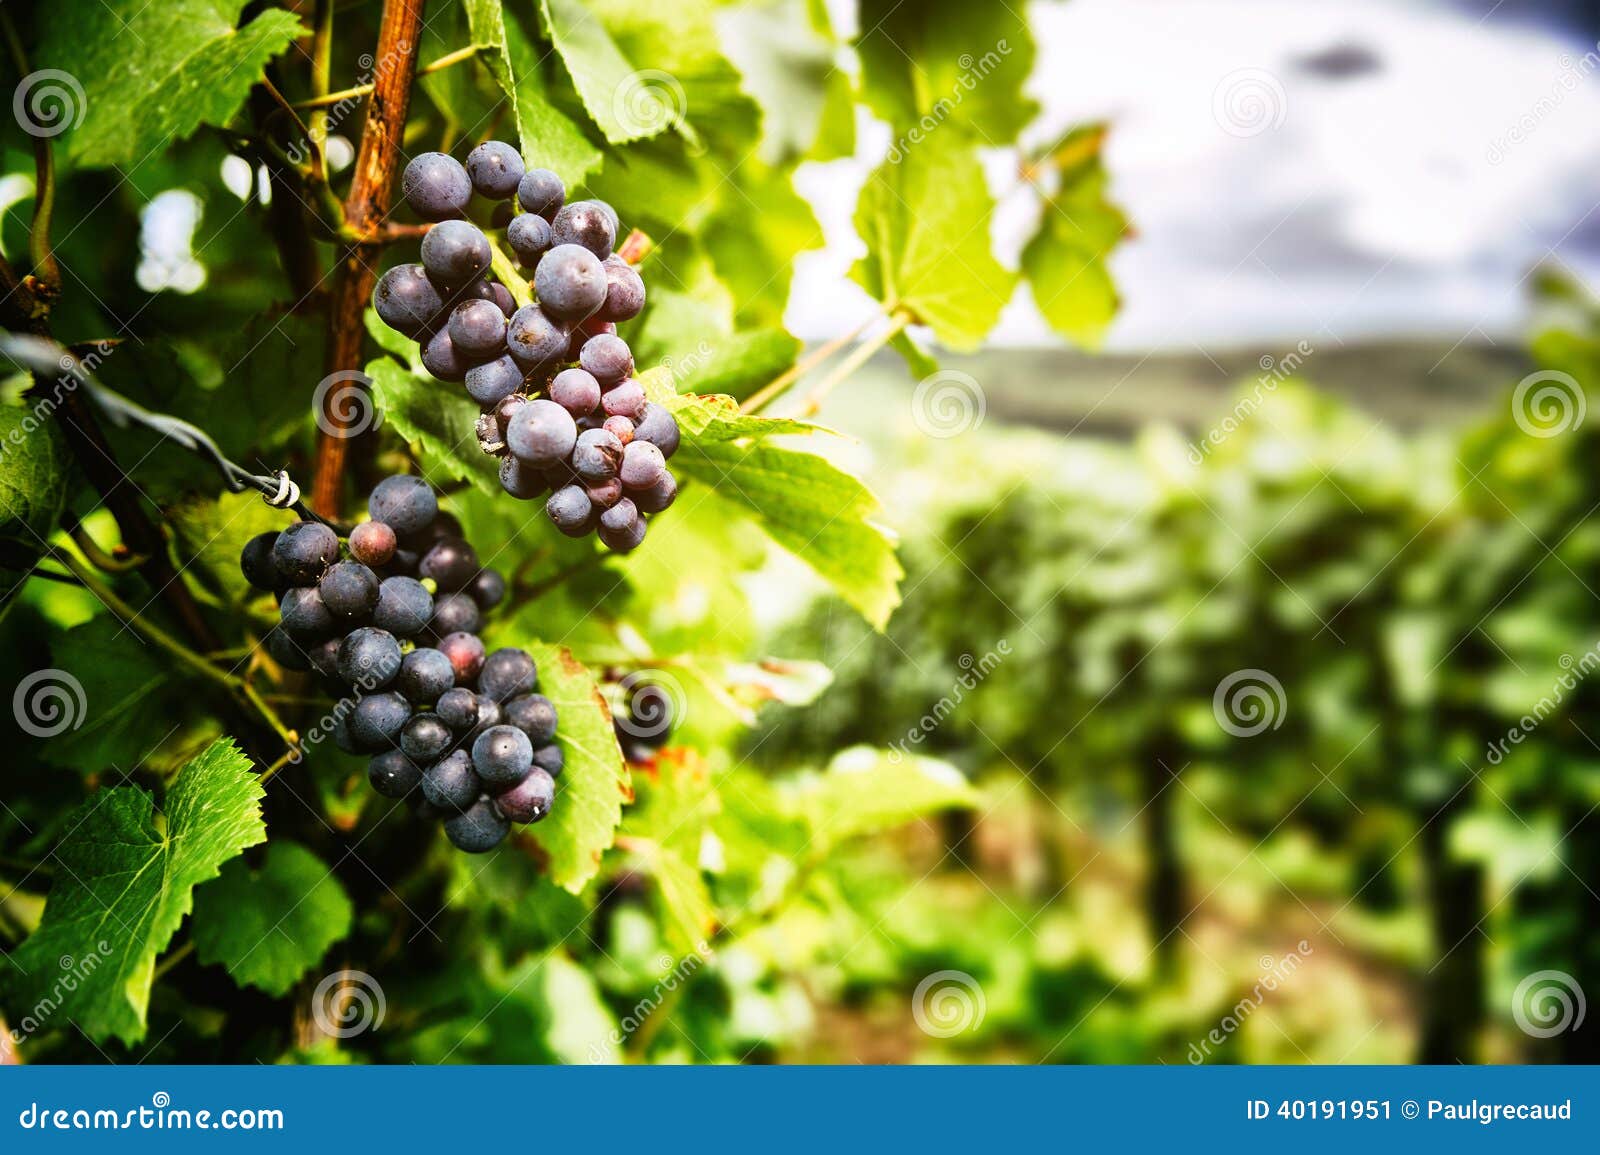 fresh organic grape on vine branch